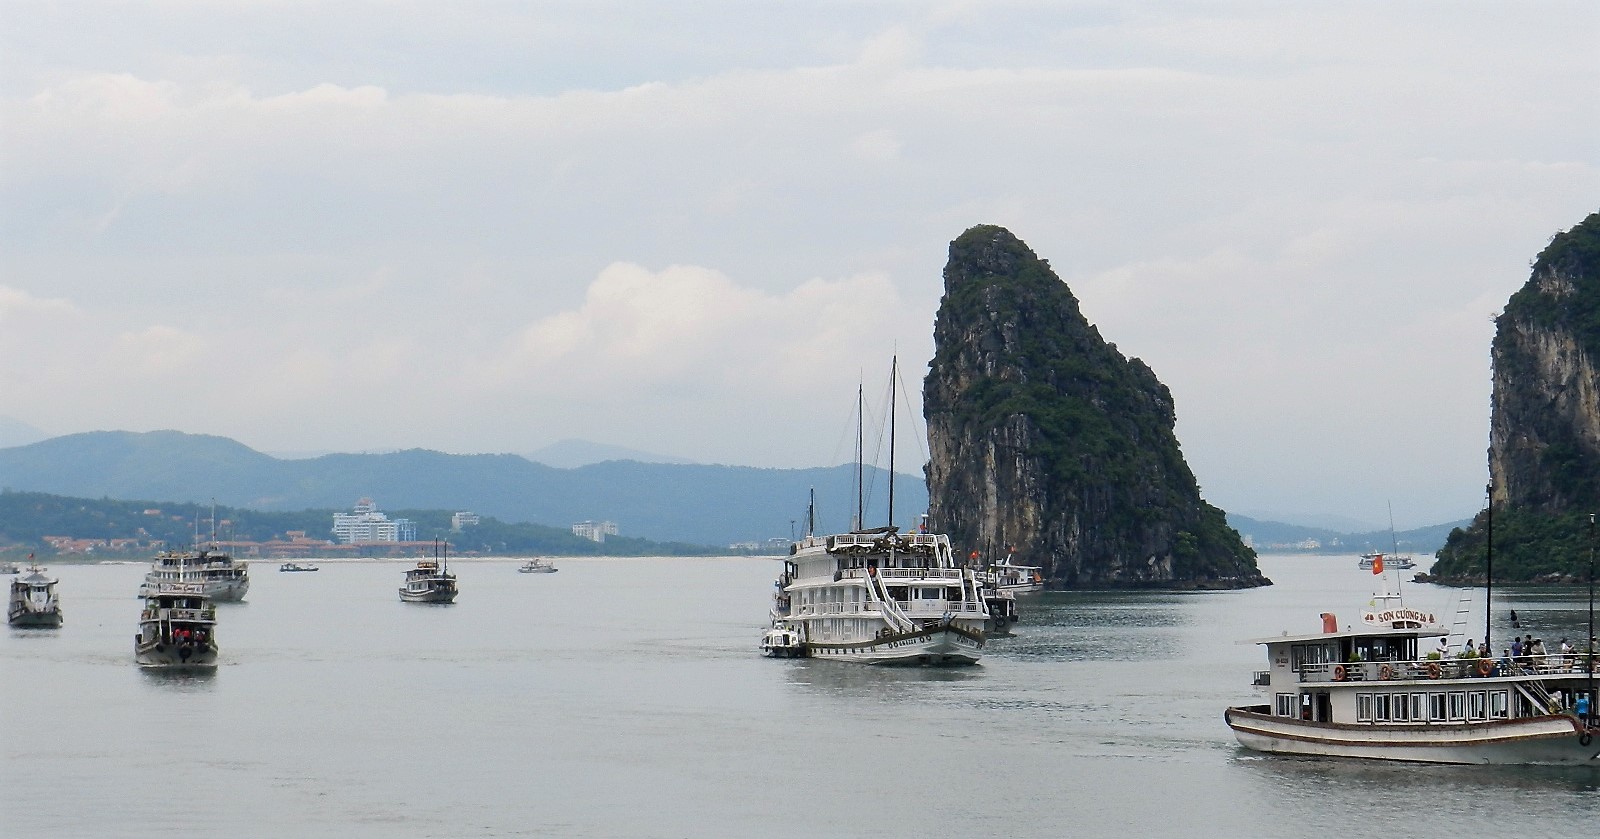 Vietnam Cambodia River Cruise 2017 - Hạ Long Bay